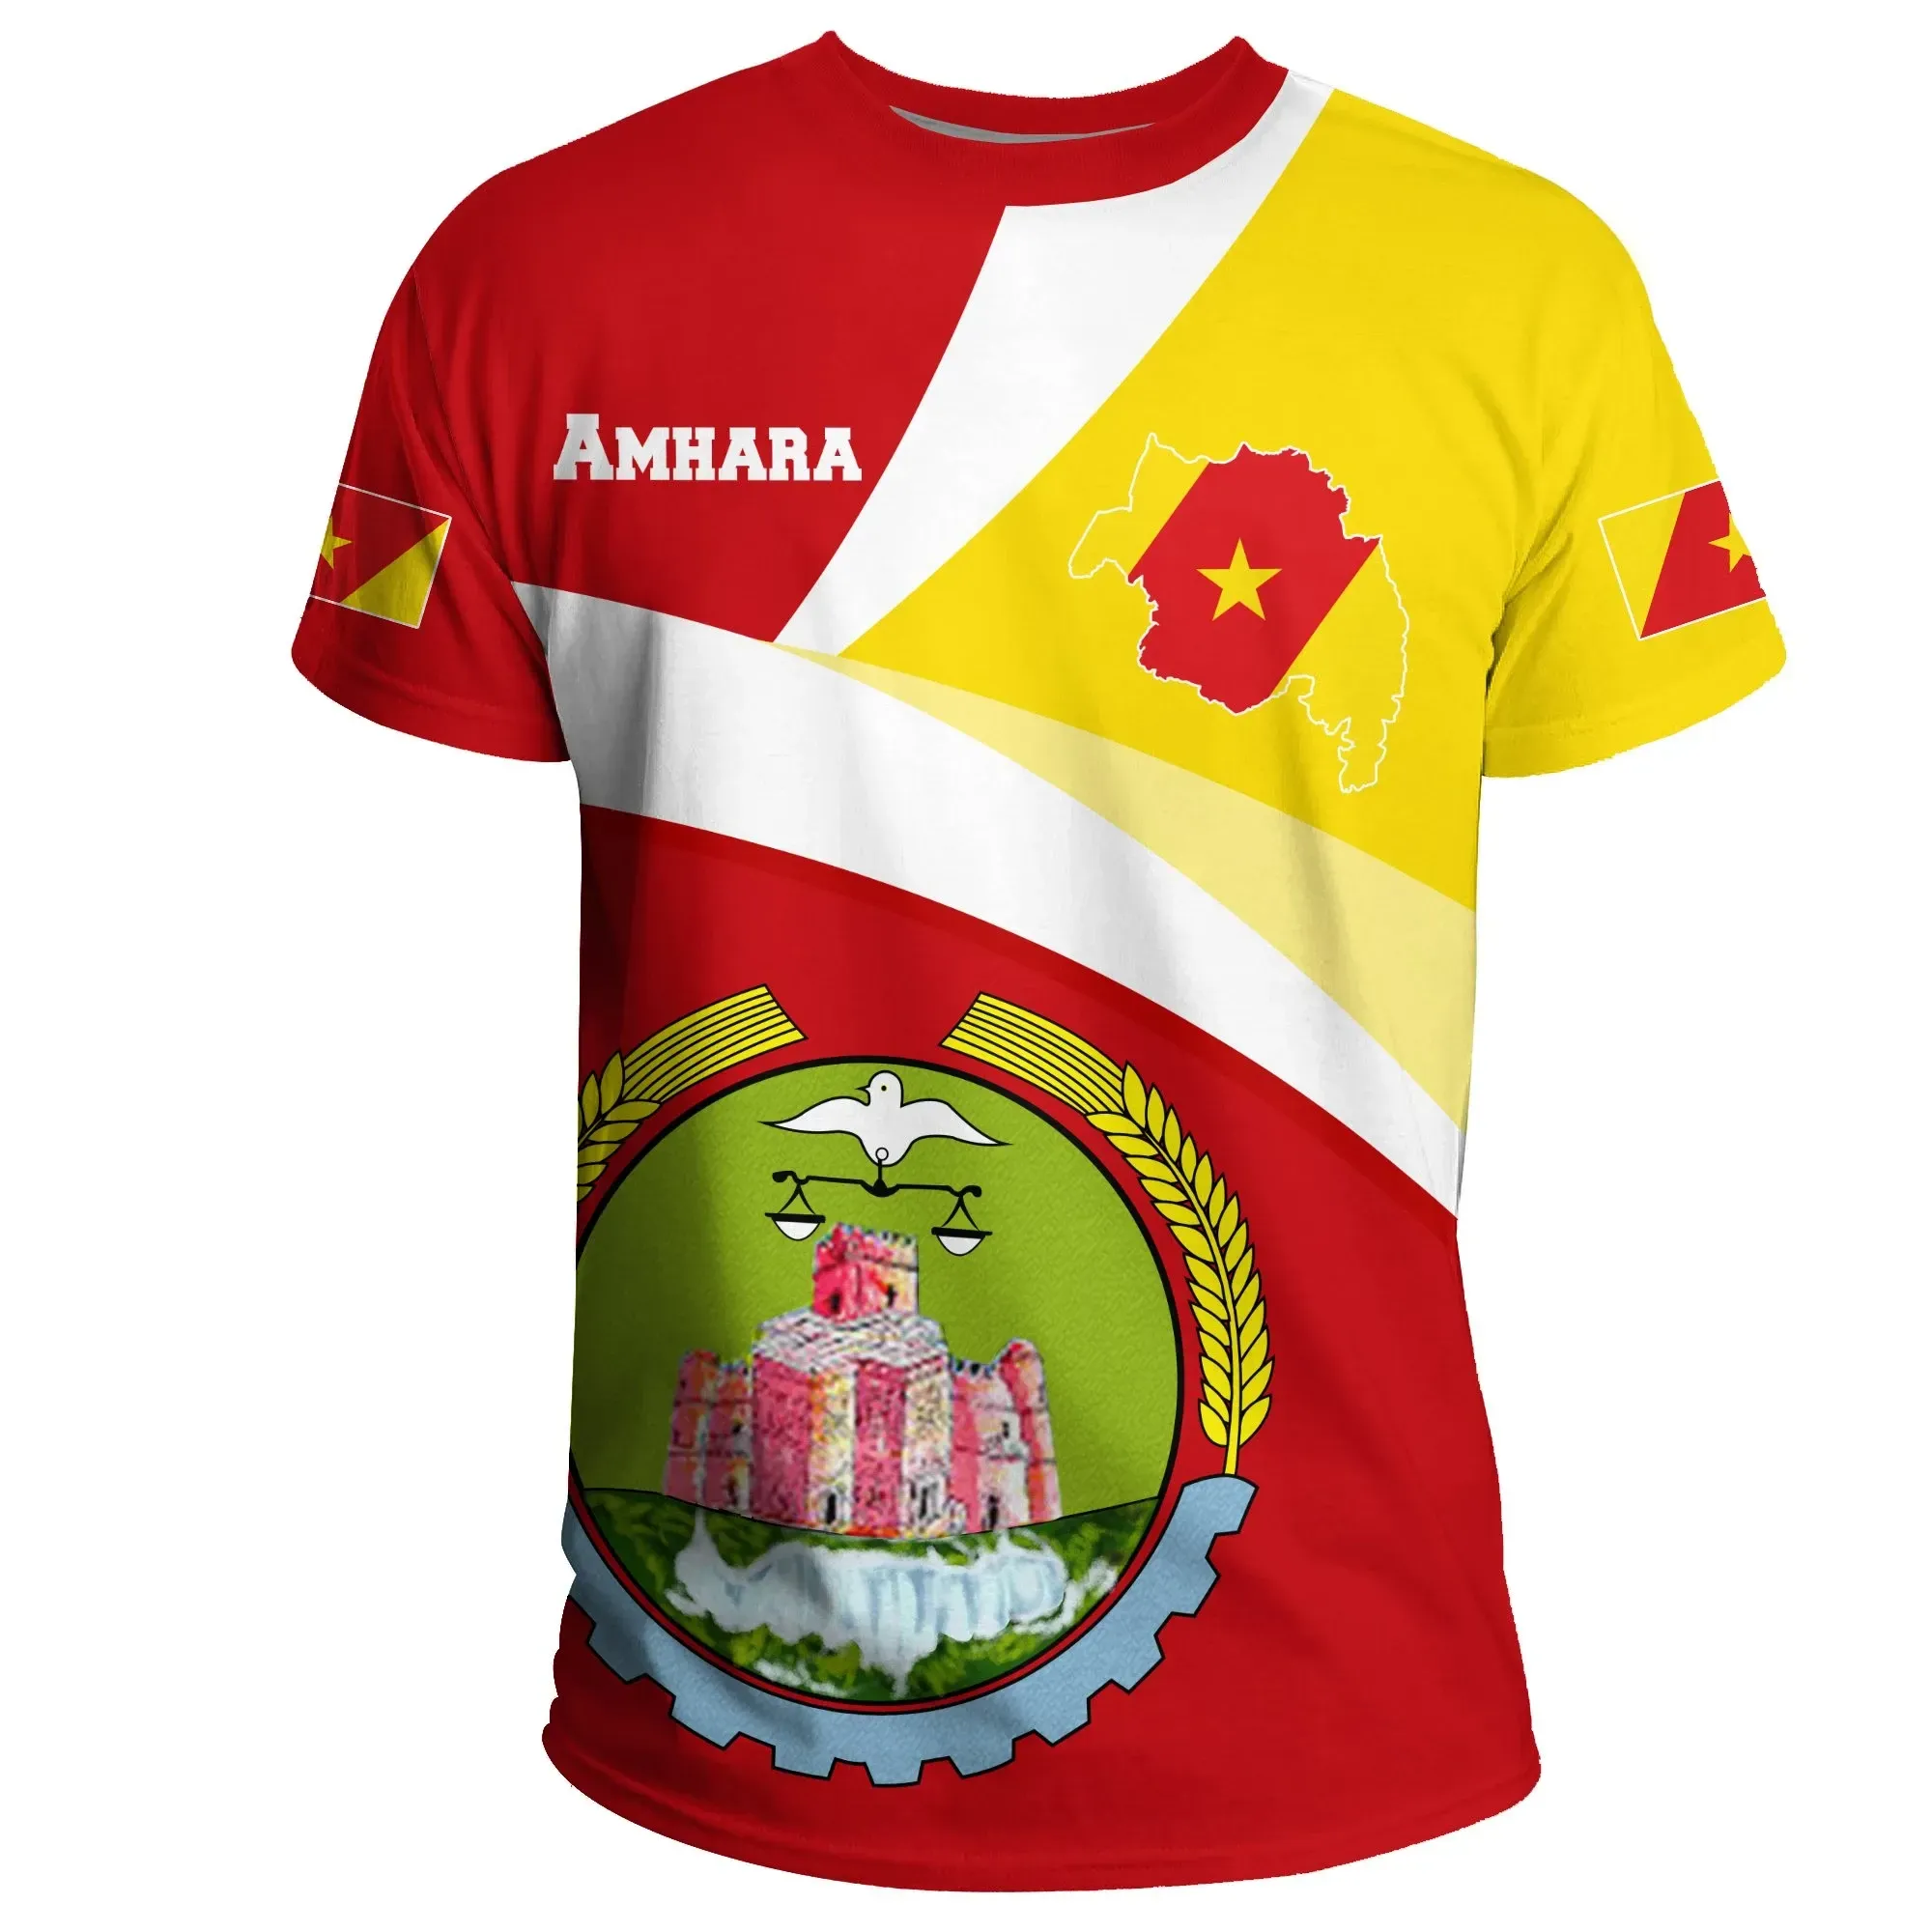 African T-shirt – Zambia Sport Premium Tee